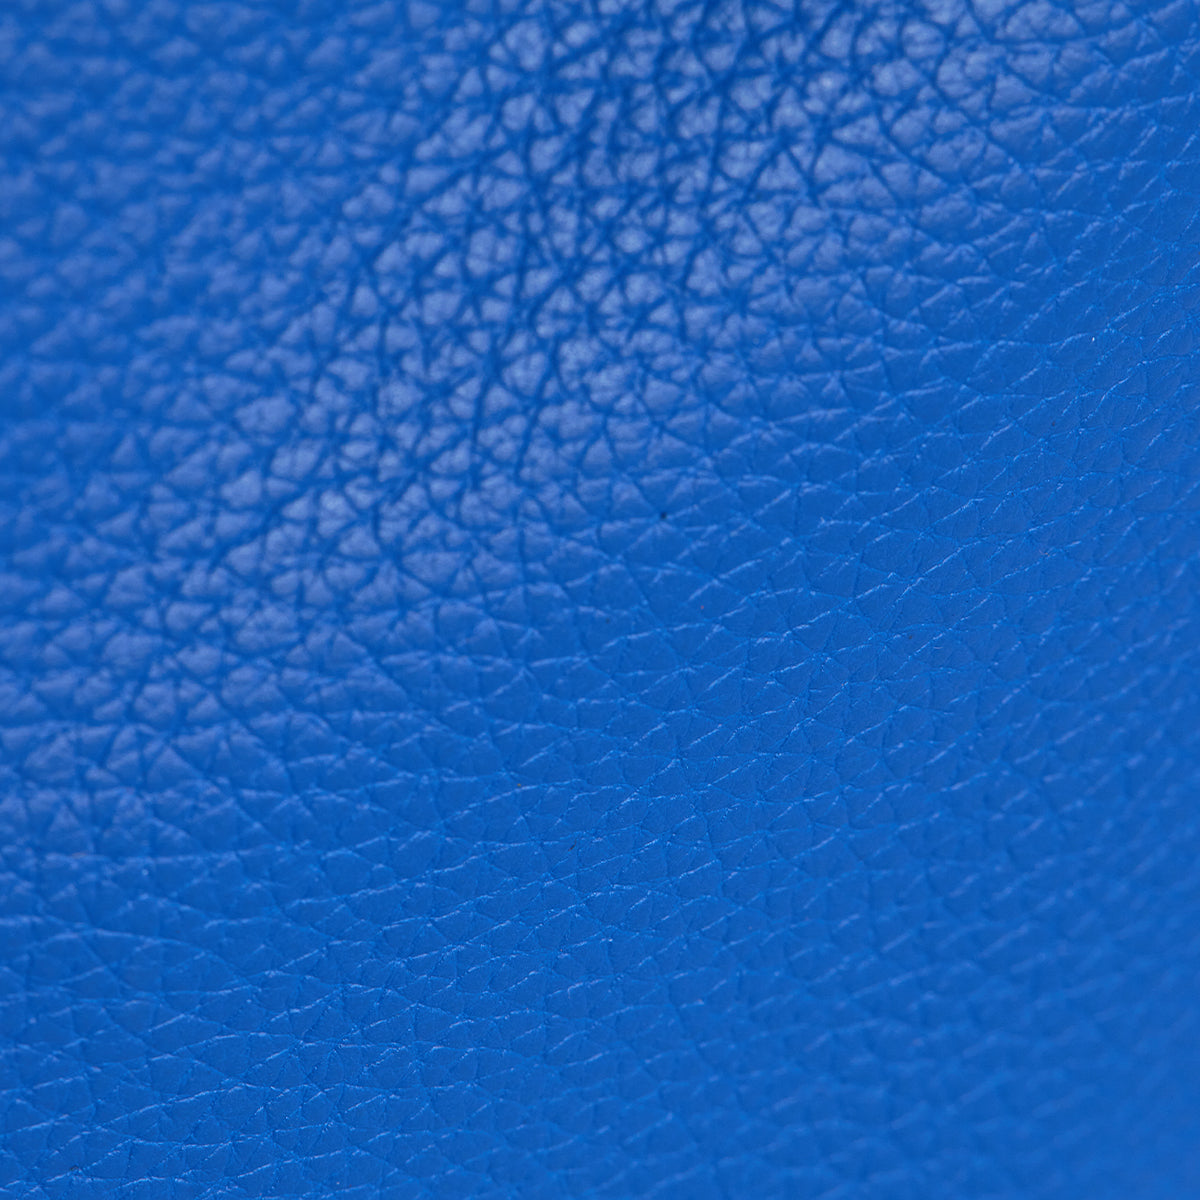 Daniel-Crossbody-Clutch-Sml-Avenue-Blue-Leather-Swatch